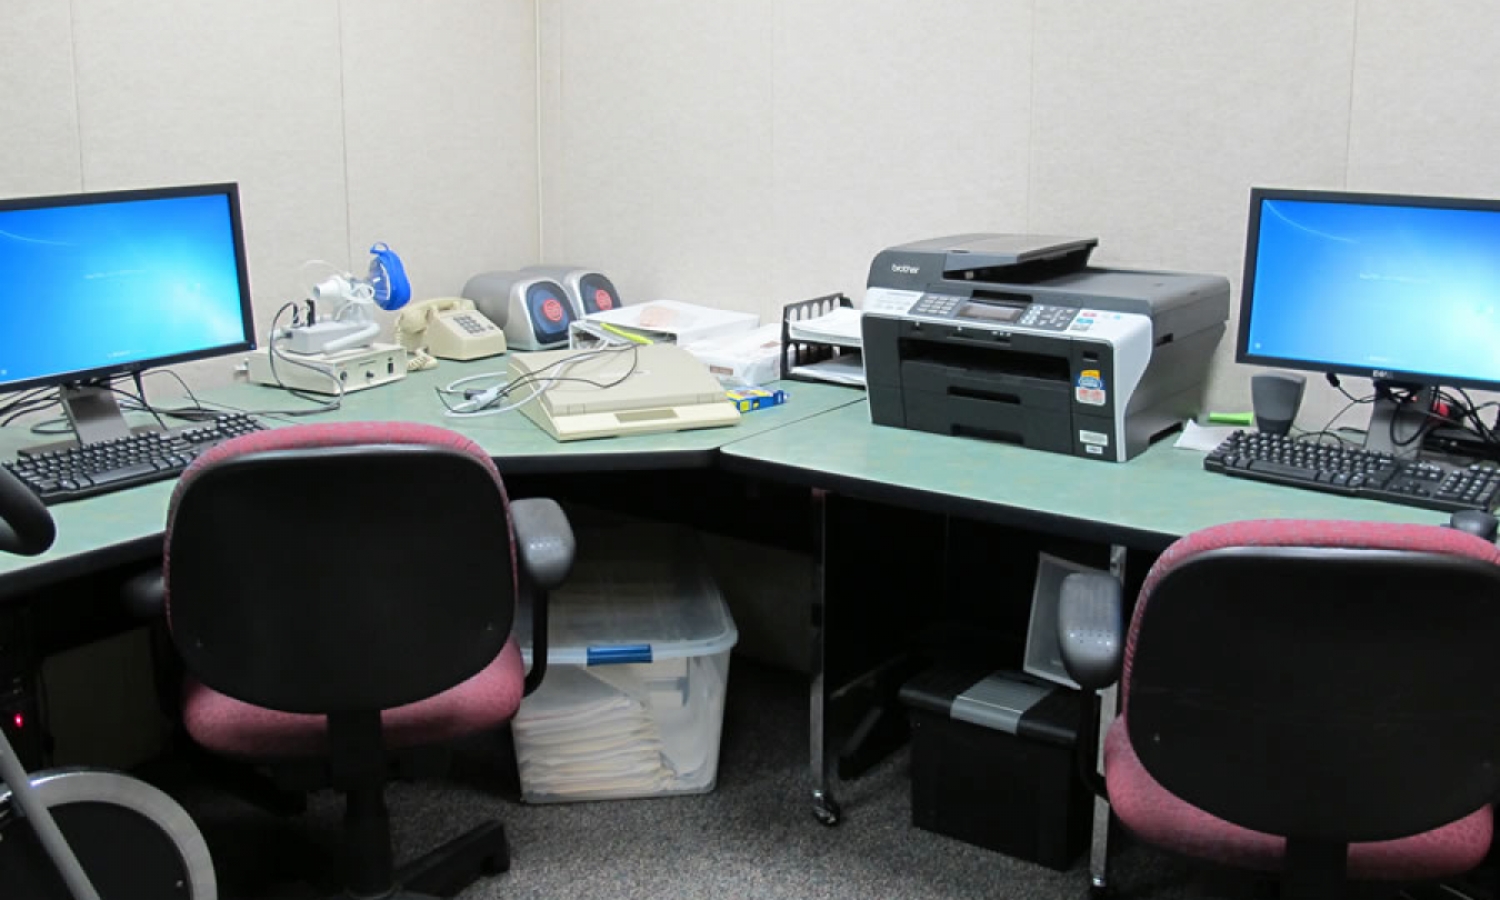 Additional computer desks for use.